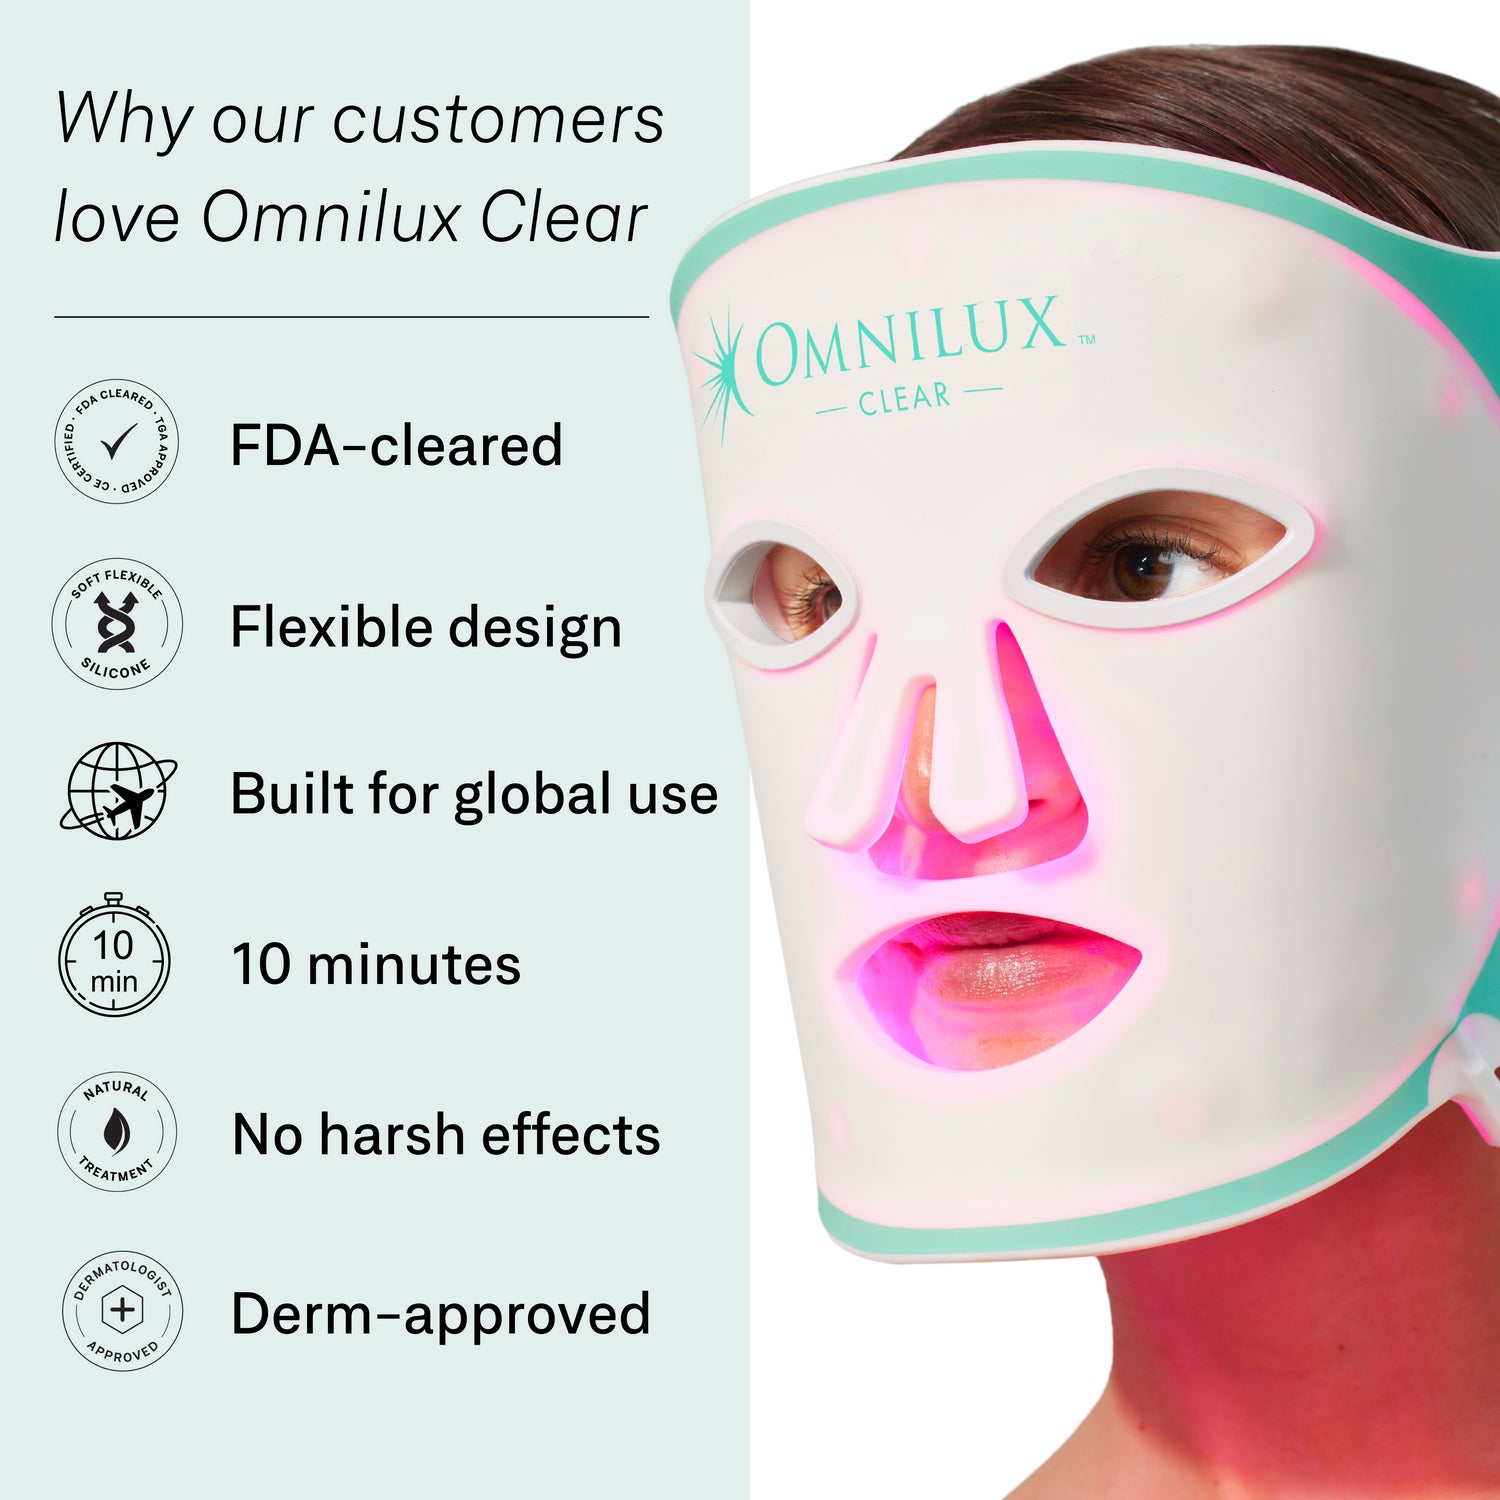 Omnilux Clear